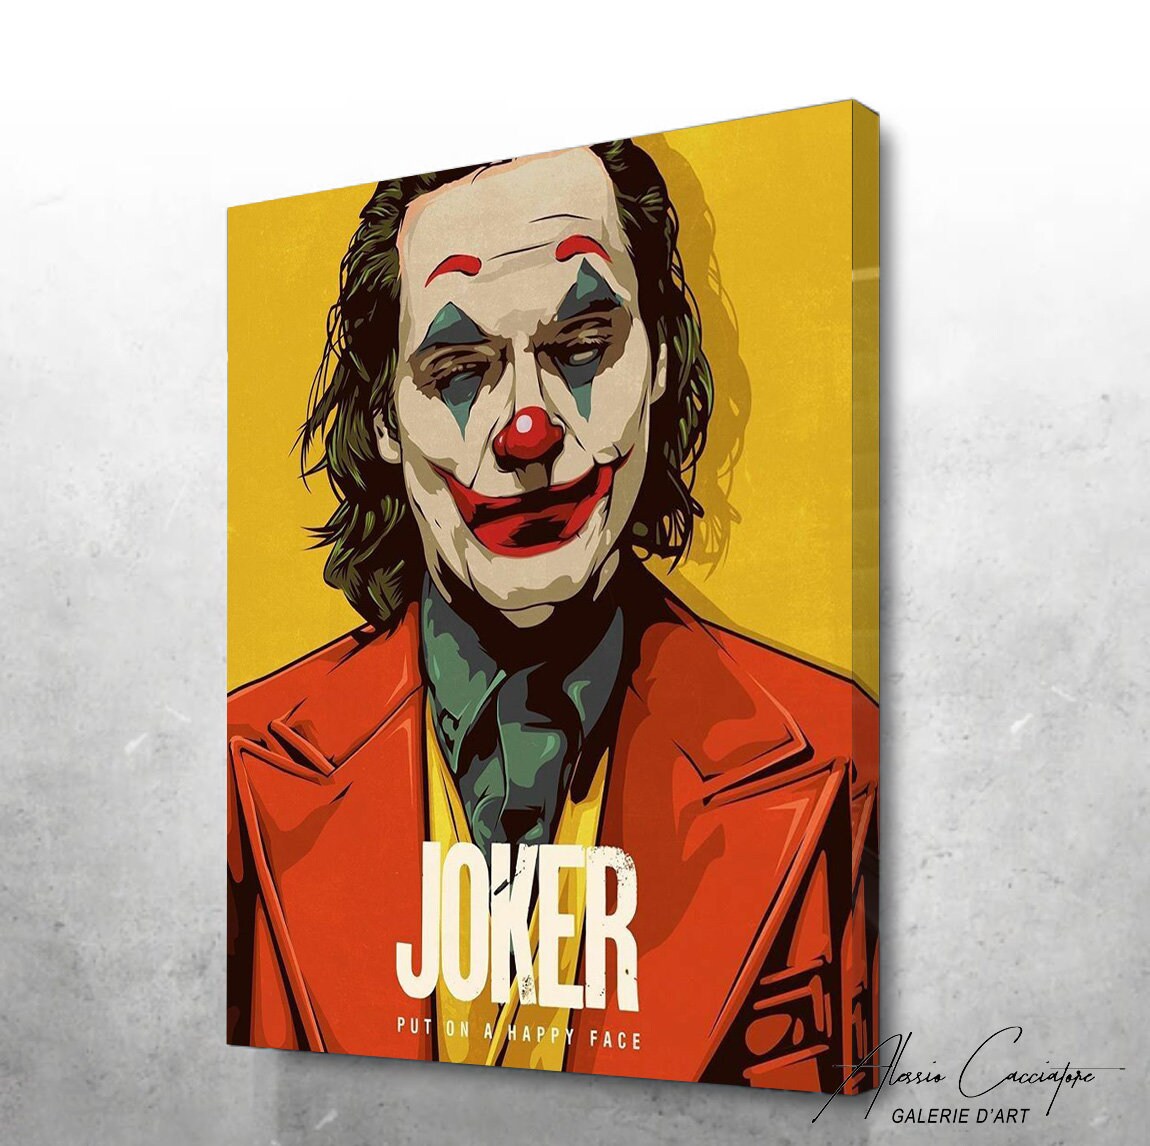 Joker POP ART PRINT framed by Alessio CacciatoreJoaquin | Etsy